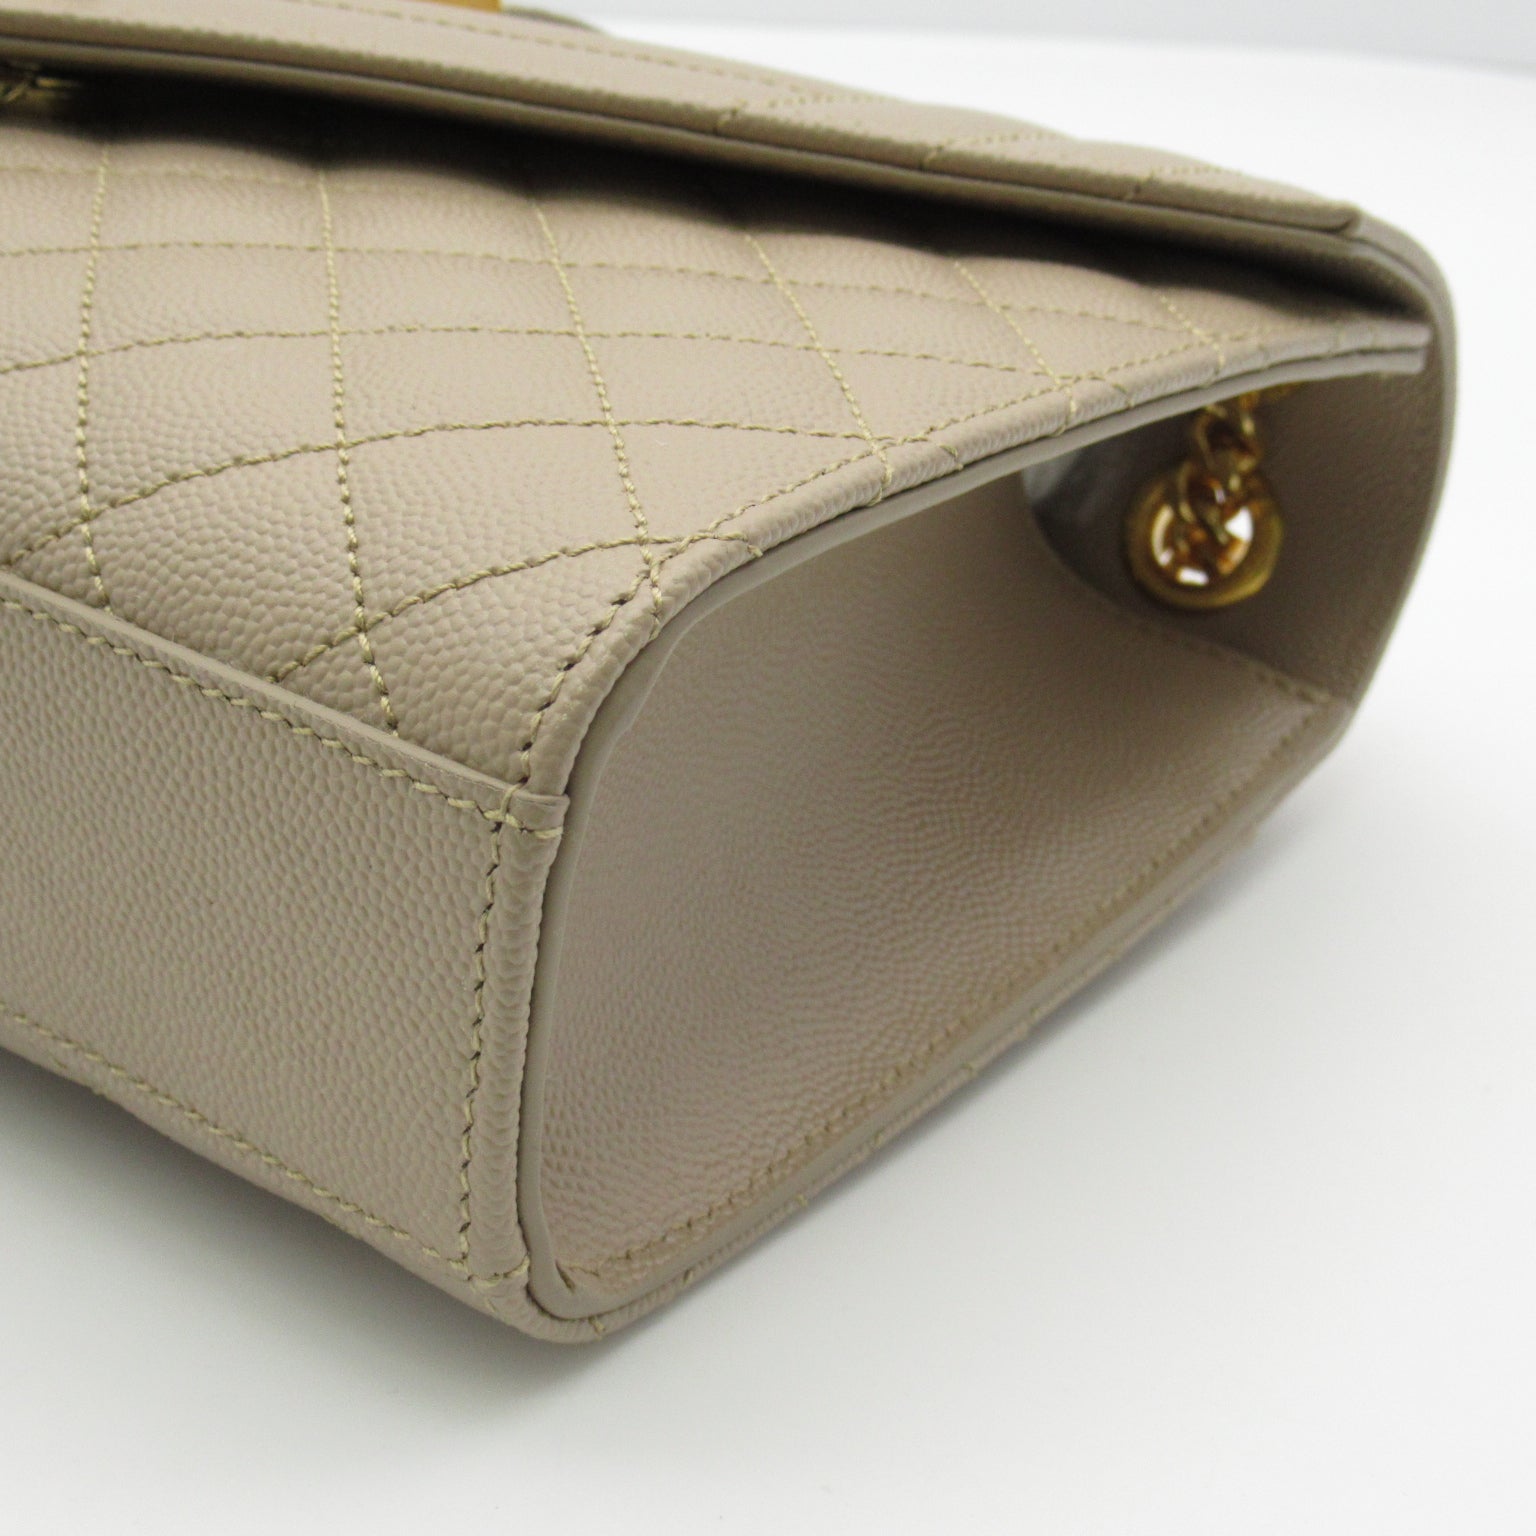 Saint Laurent Chain Shoulder Bag Leather Bag Beige  600185BOW912721